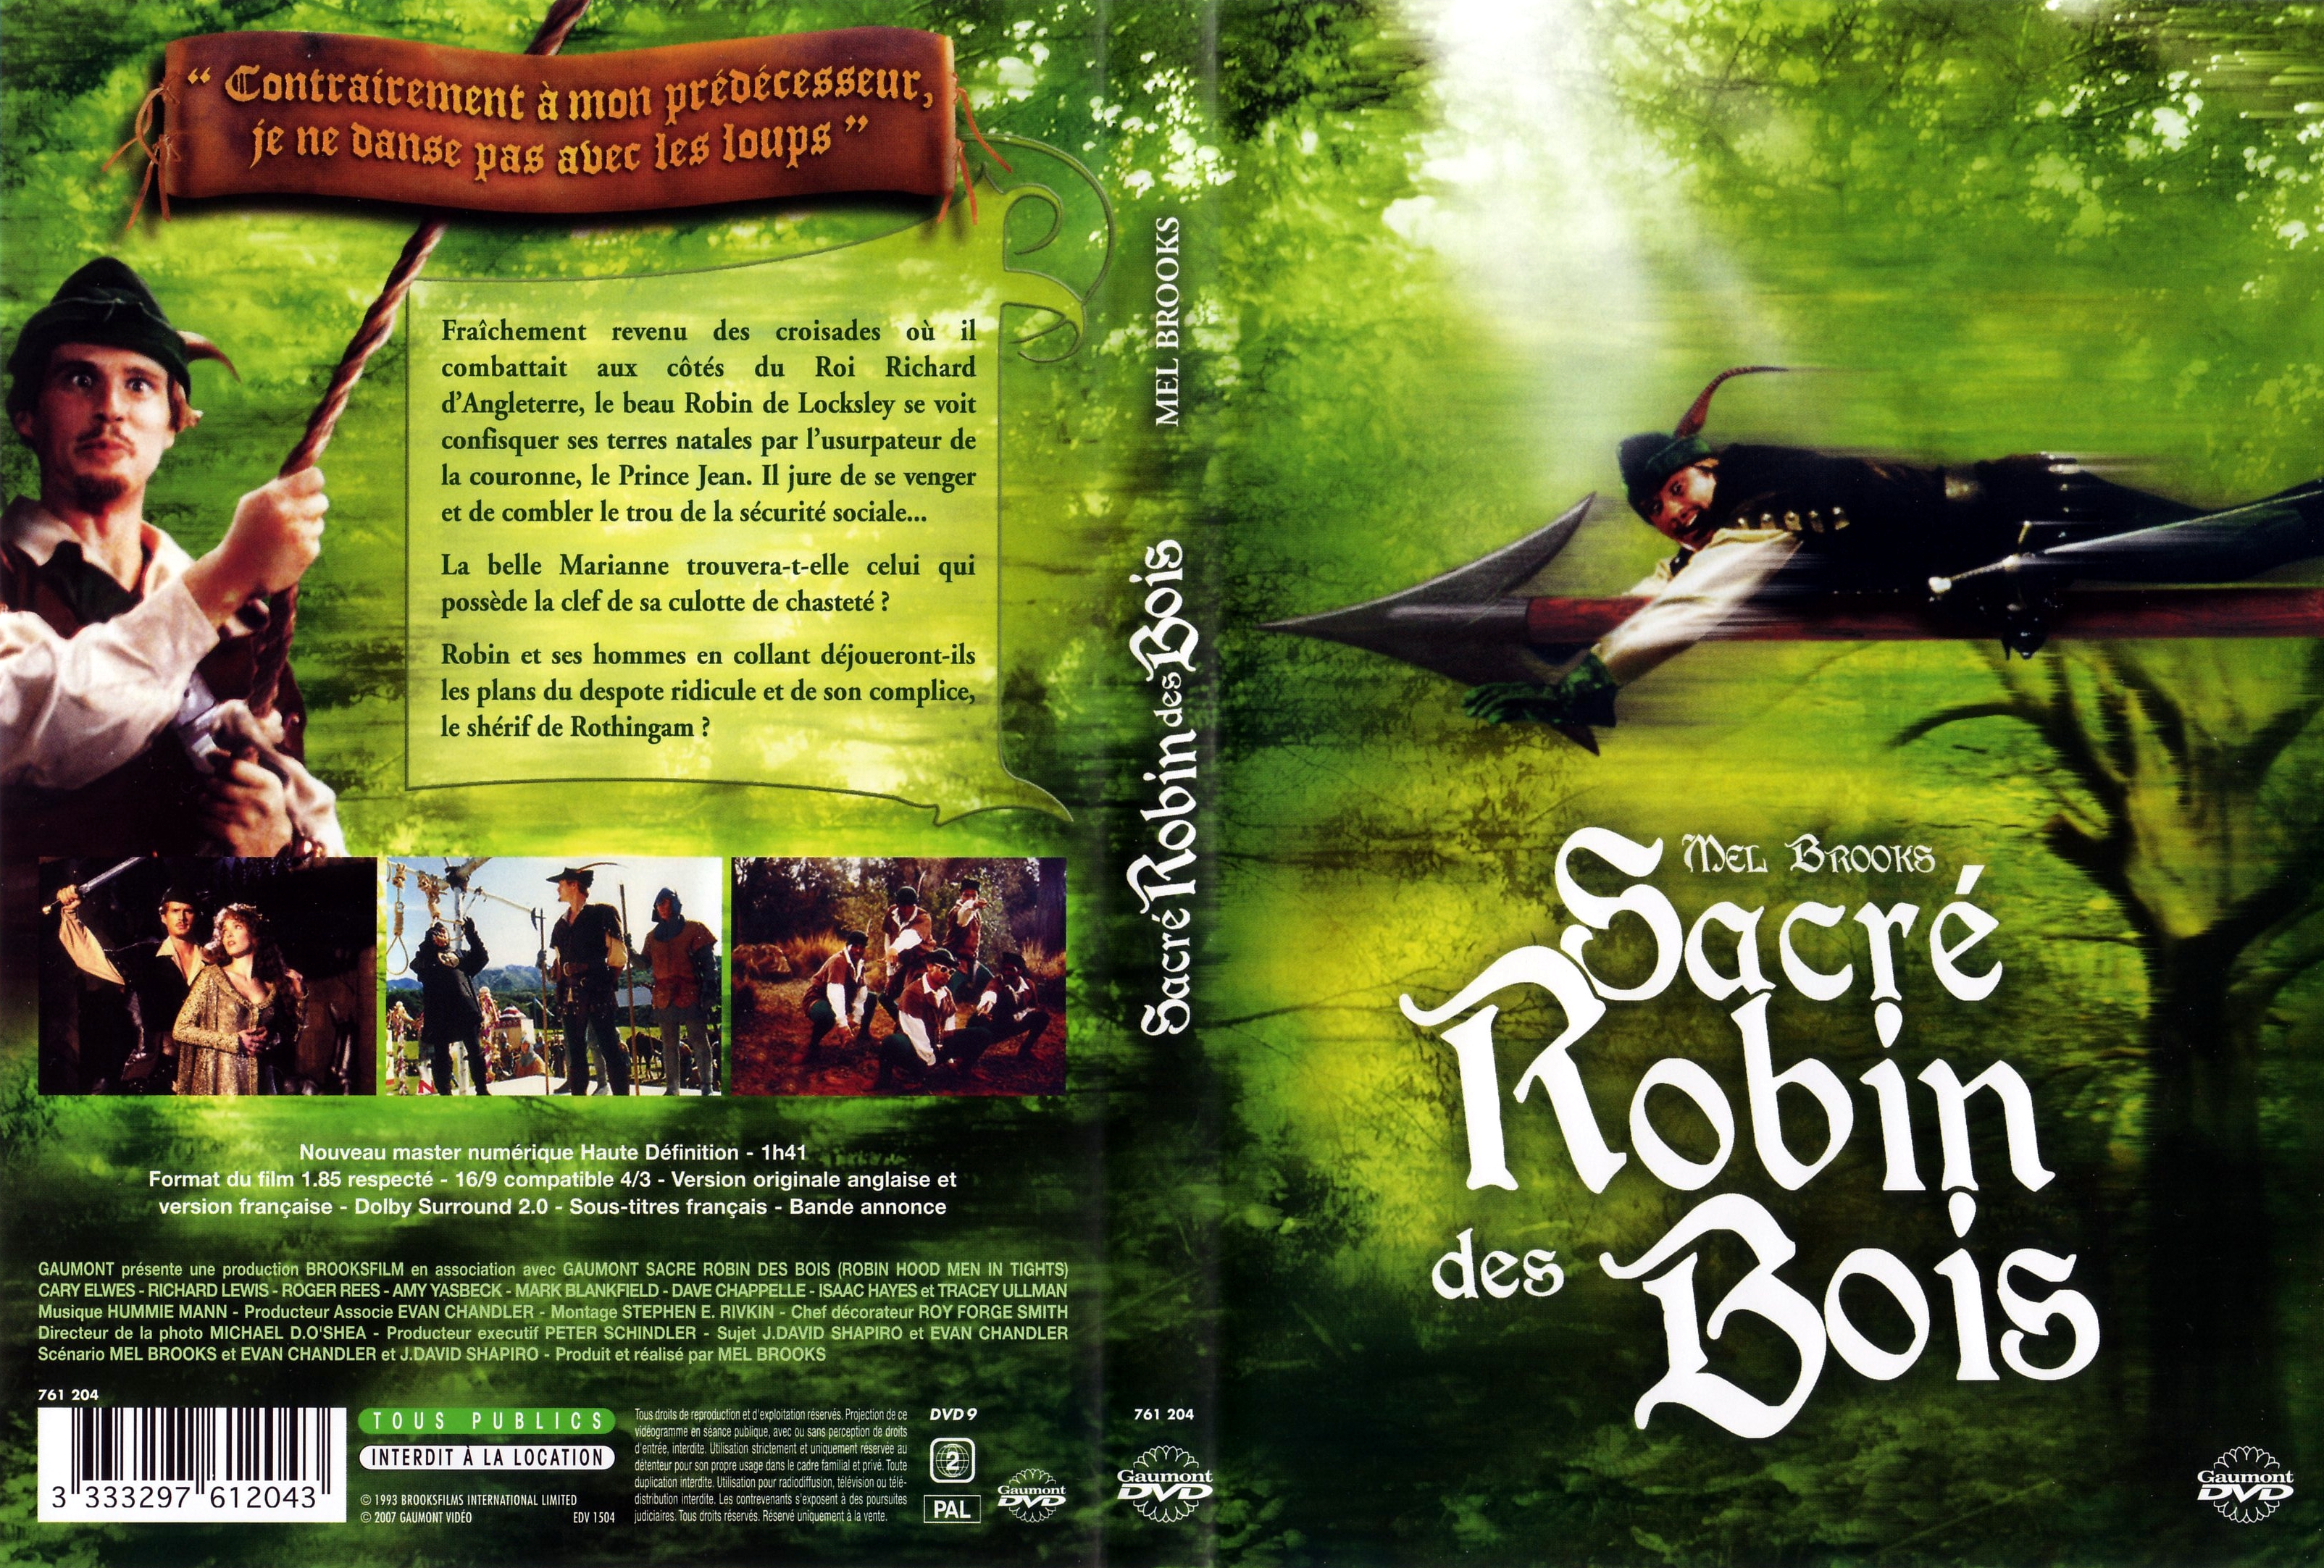 Jaquette DVD Sacr Robin des bois